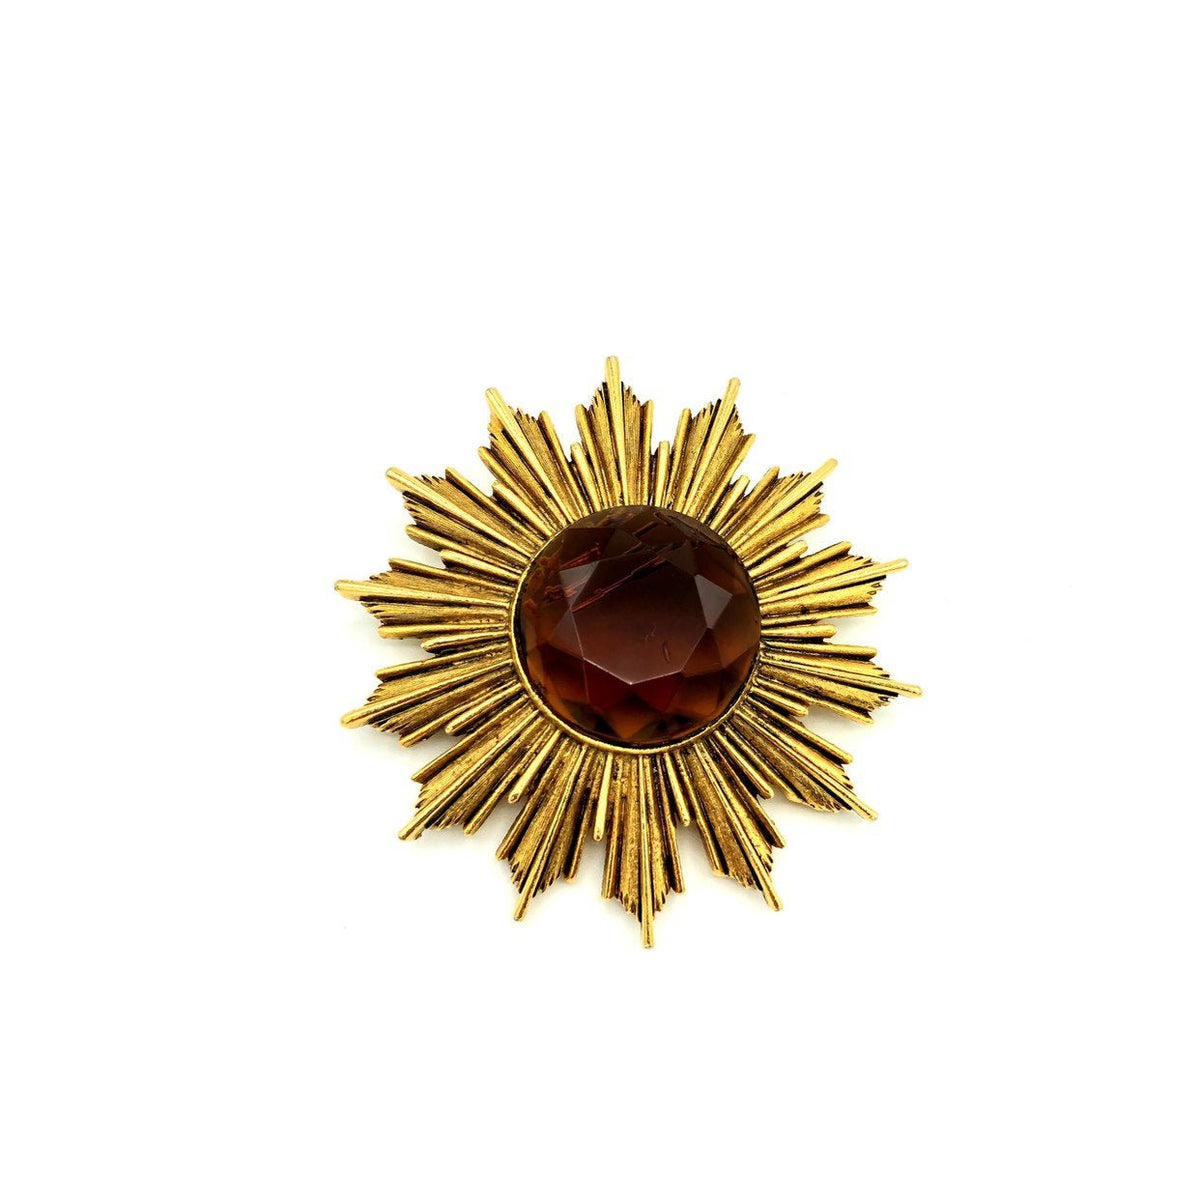 Gold Vintage Modernist Starburst Brooch - 24 Wishes Vintage Jewelry